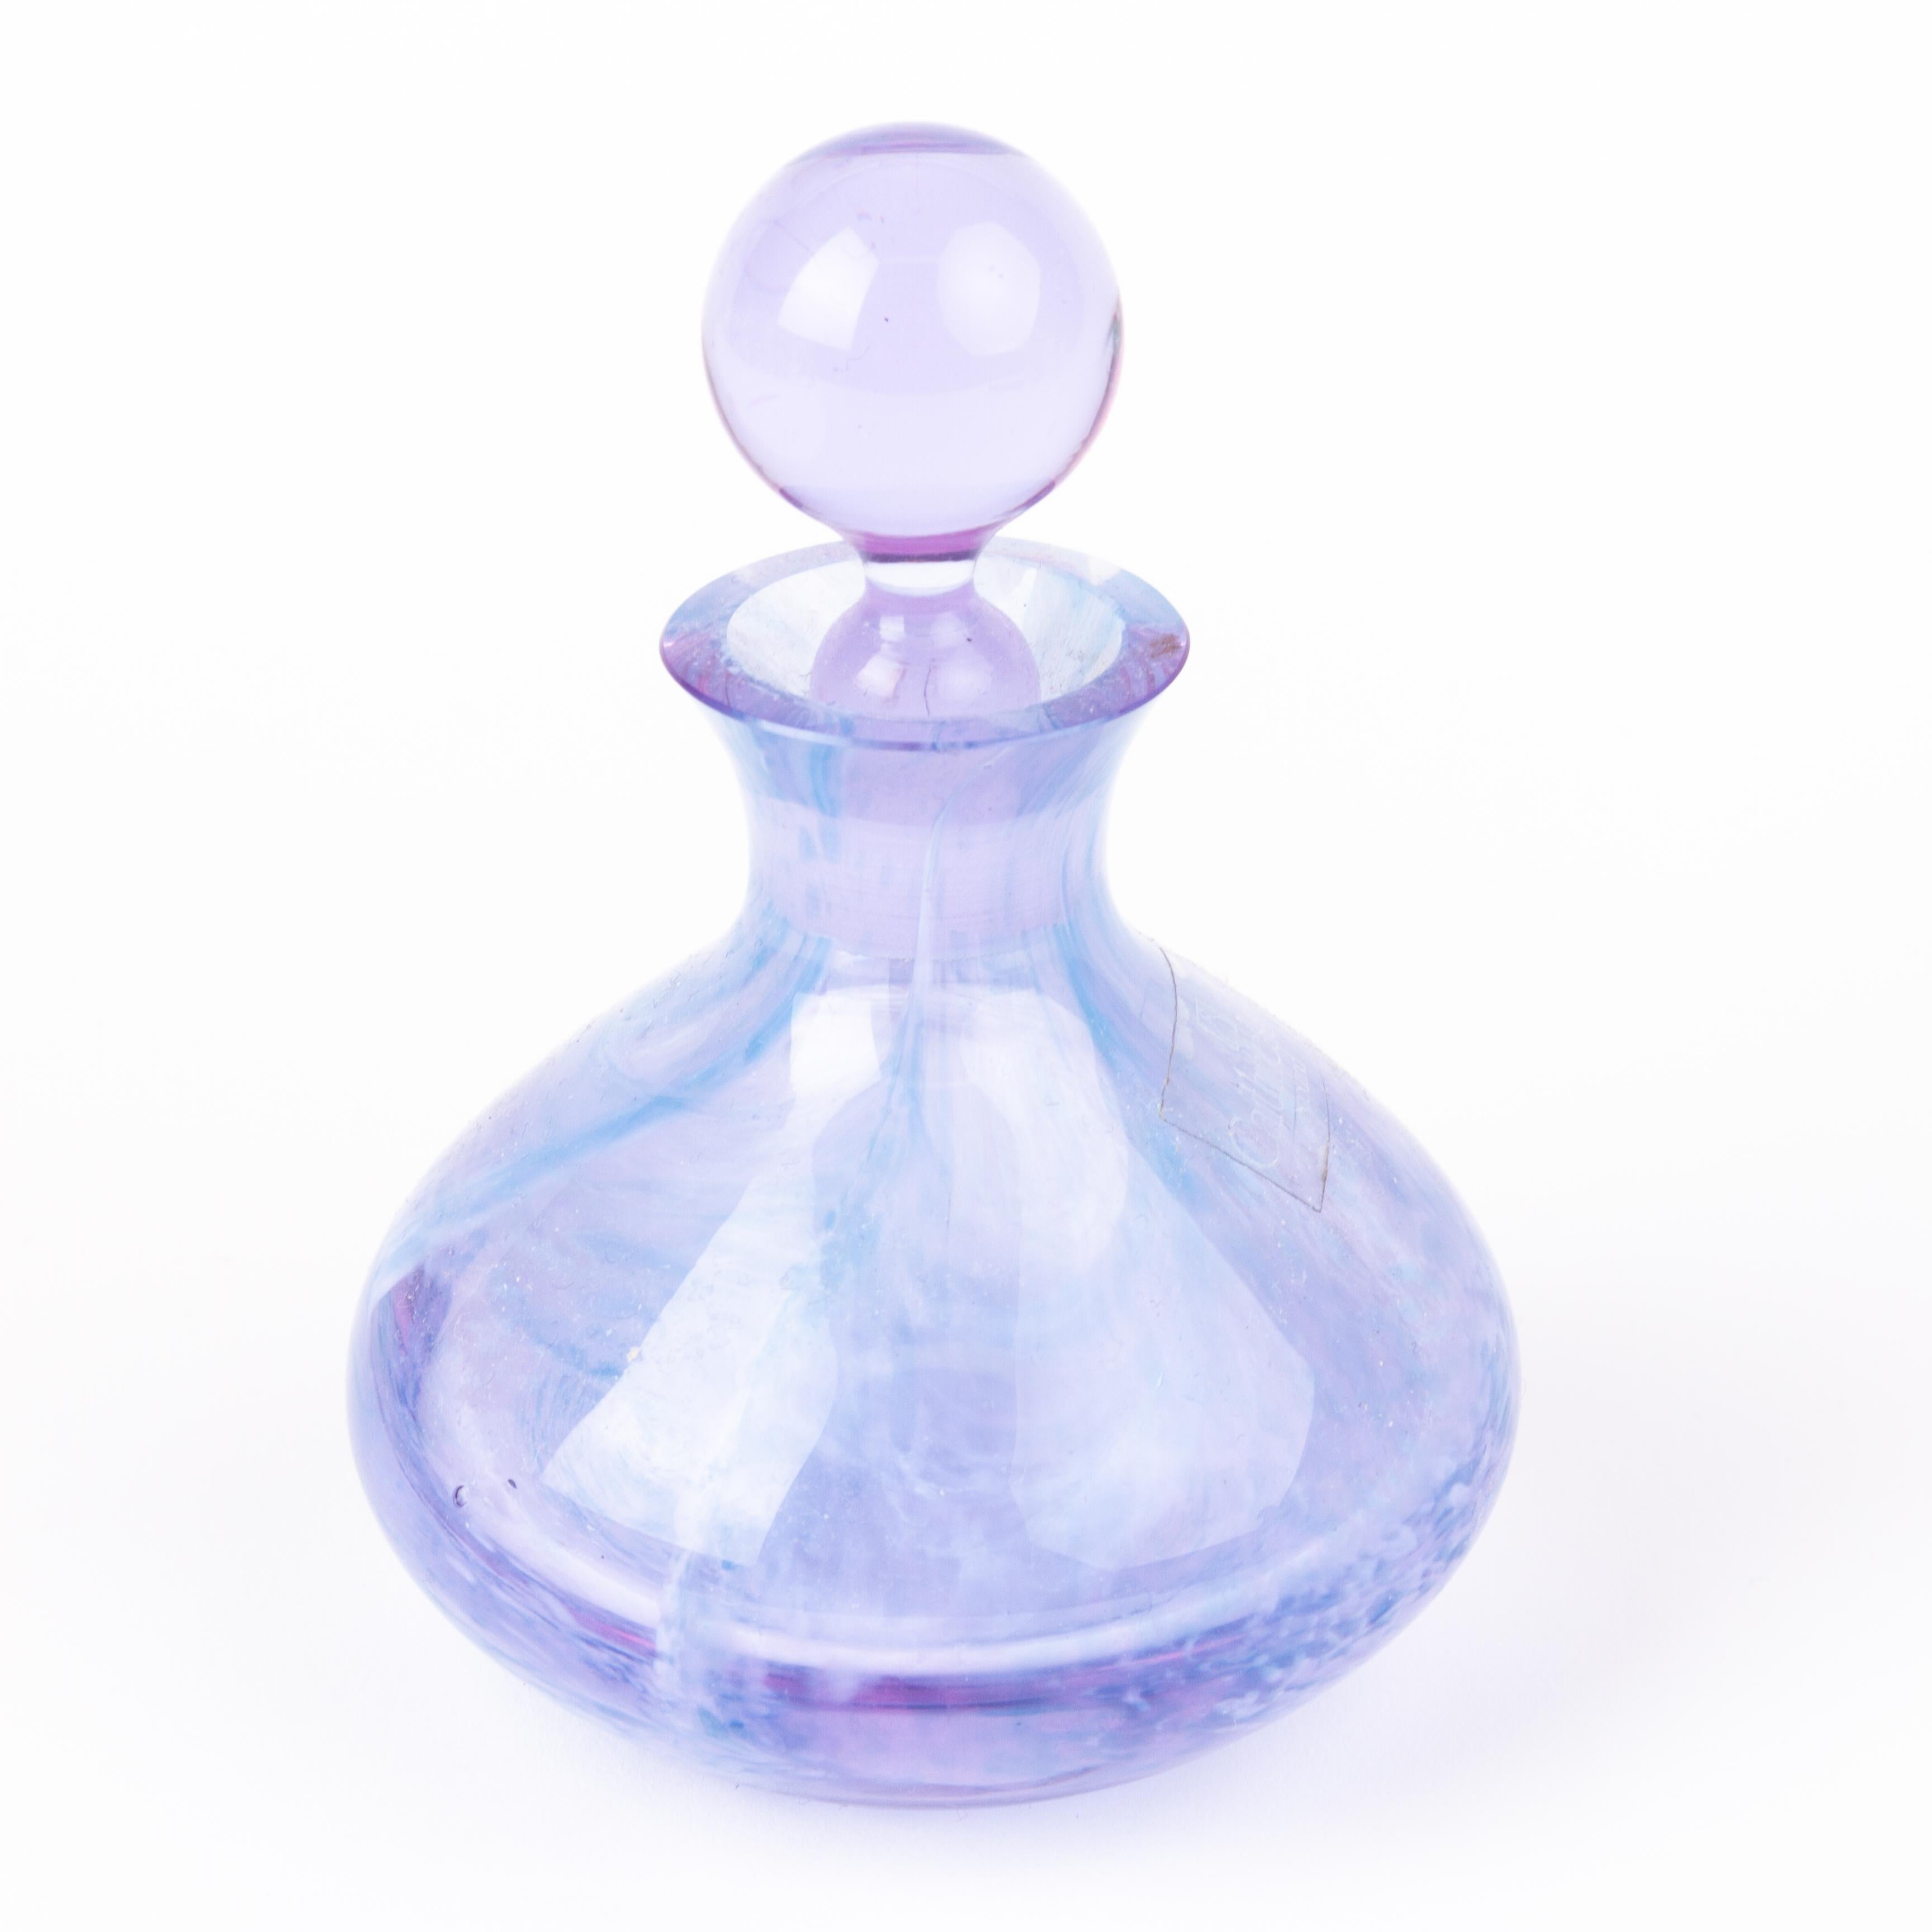 Caithness Scottish Glass Perfume Bottle 
Good condition
Free international shipping.